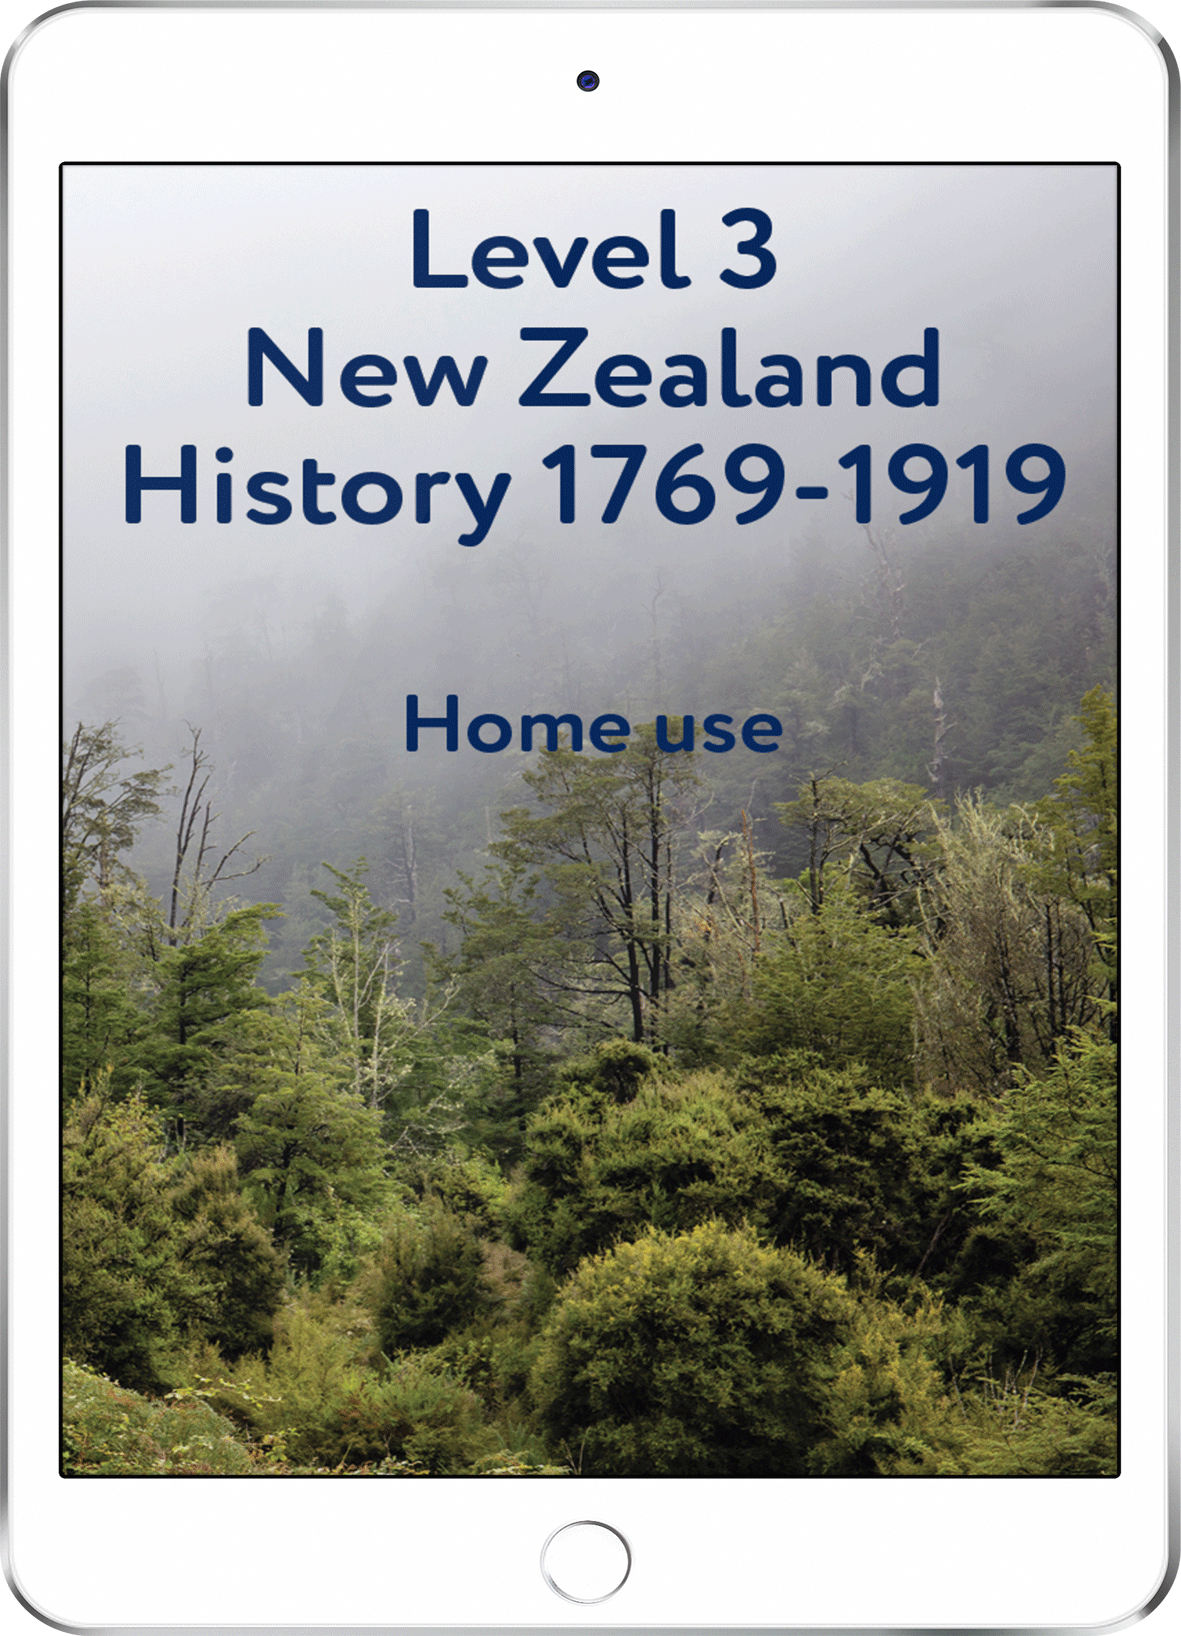 Level 3 New Zealand History 1769-1919 - Home Use